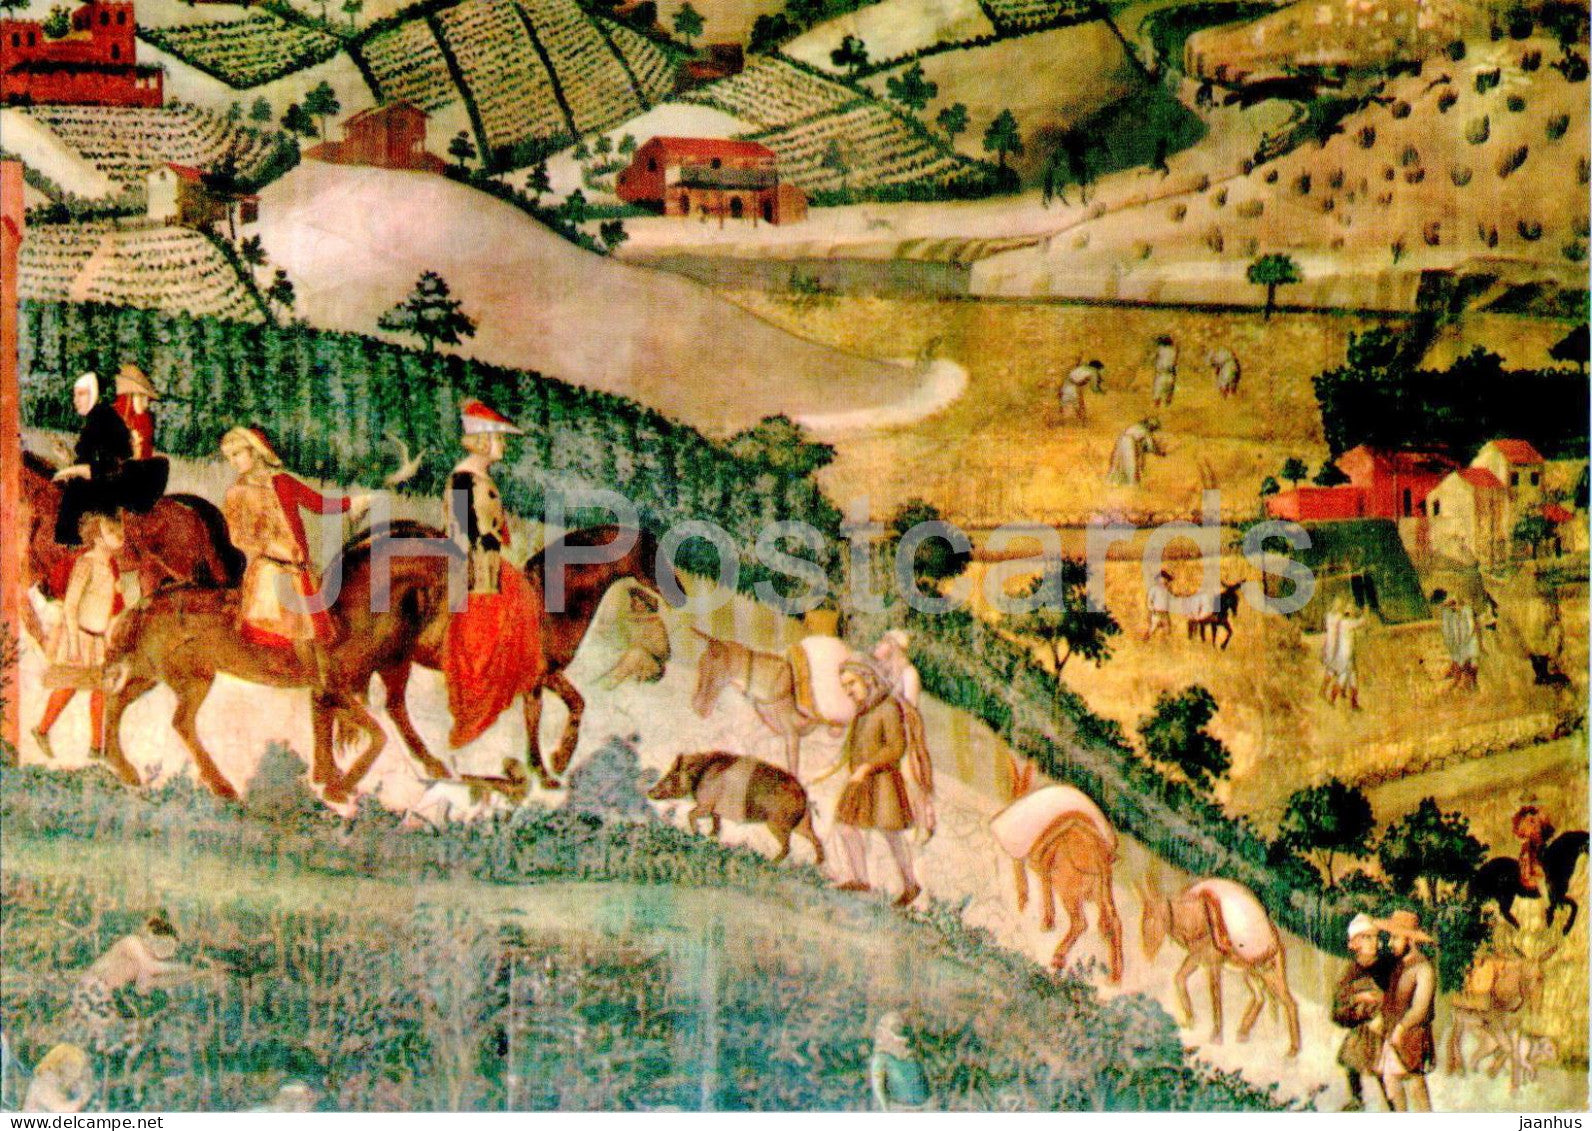 Siena - Palazzo Pubblico - painting by Ambrogio Lorenzetti - 15 - Italy - unused - JH Postcards